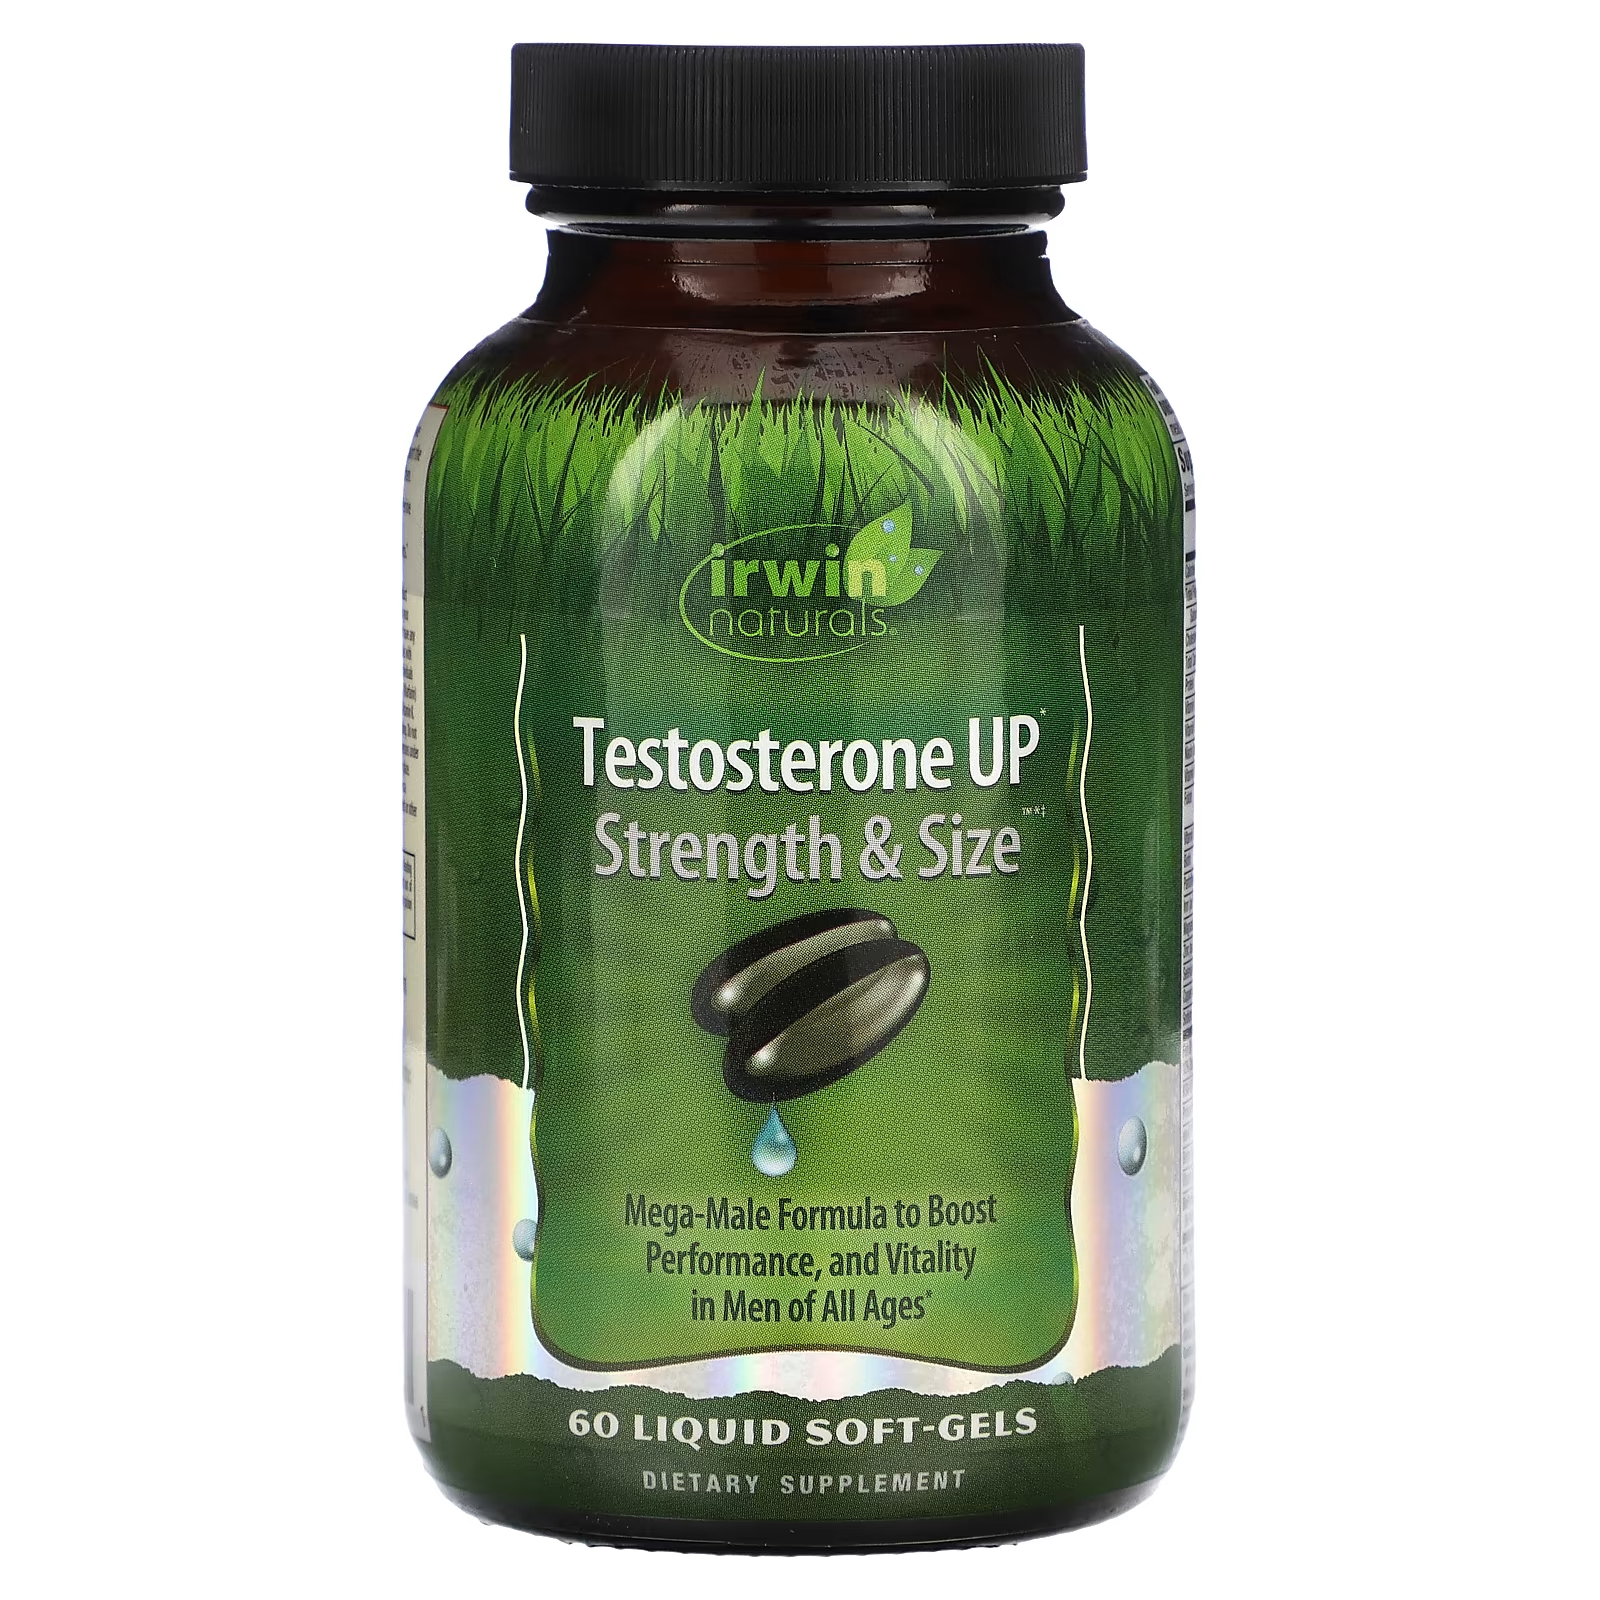 Пищевая добавка Irwin Naturals Testosterone Up Strength & Size, 60 жидких таблеток naturesplus ultra t male повышение тестостерона для мужчин максимальная сила 60 таблеток